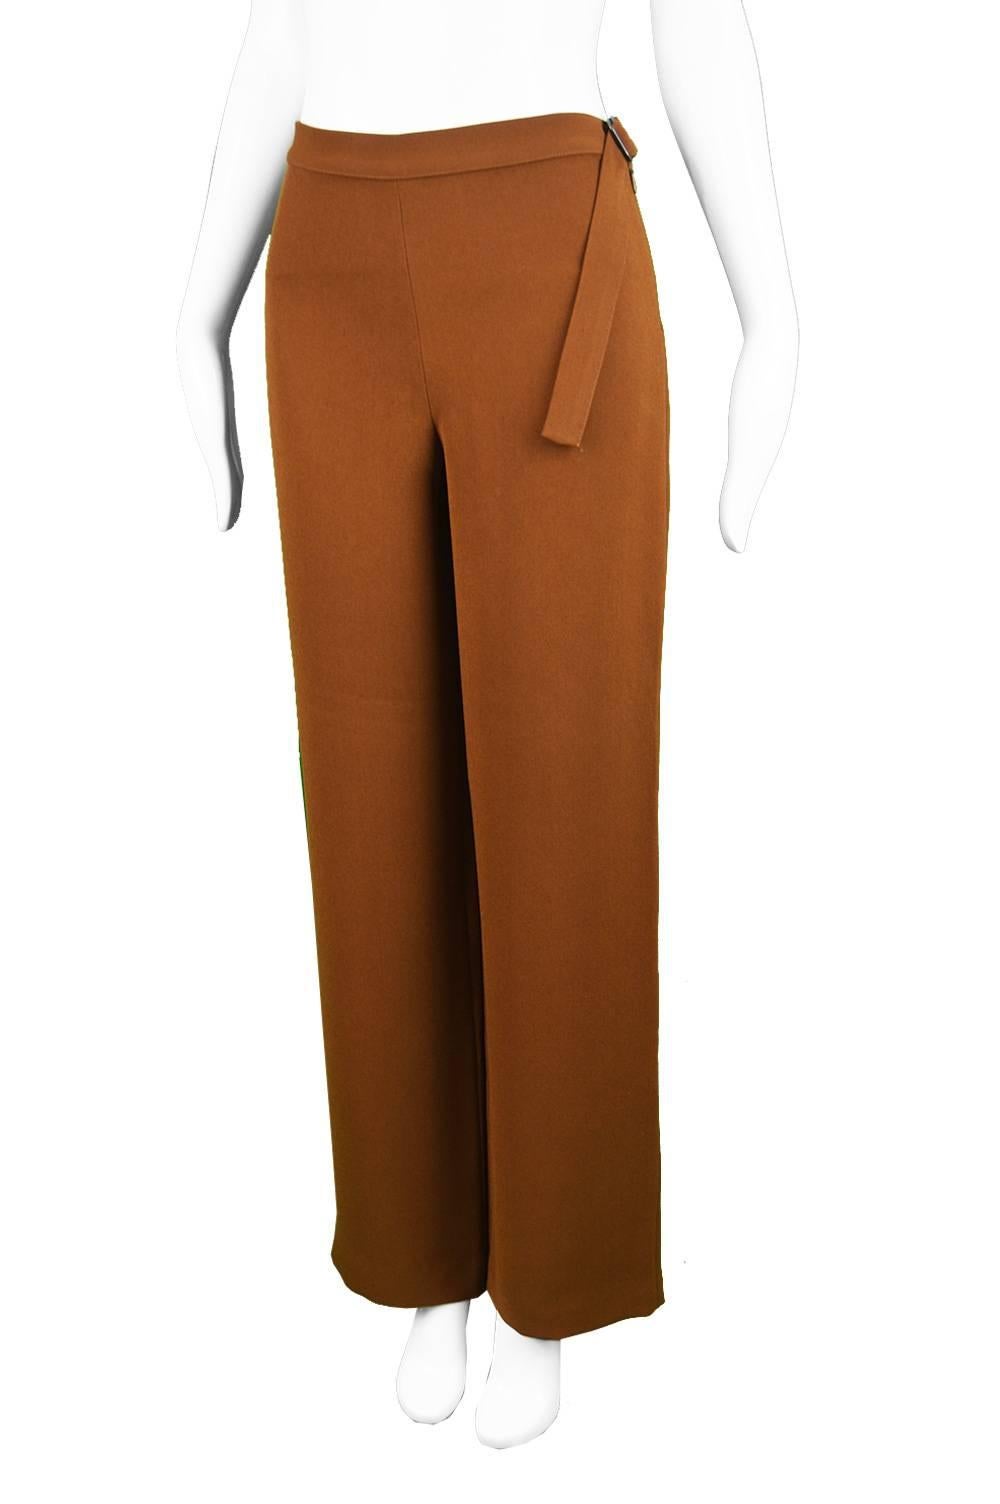 Jean Paul Gaultier Vintage Brown Crepe Wide Leg Palazzo Trouser Suit, 1990s  For Sale 5